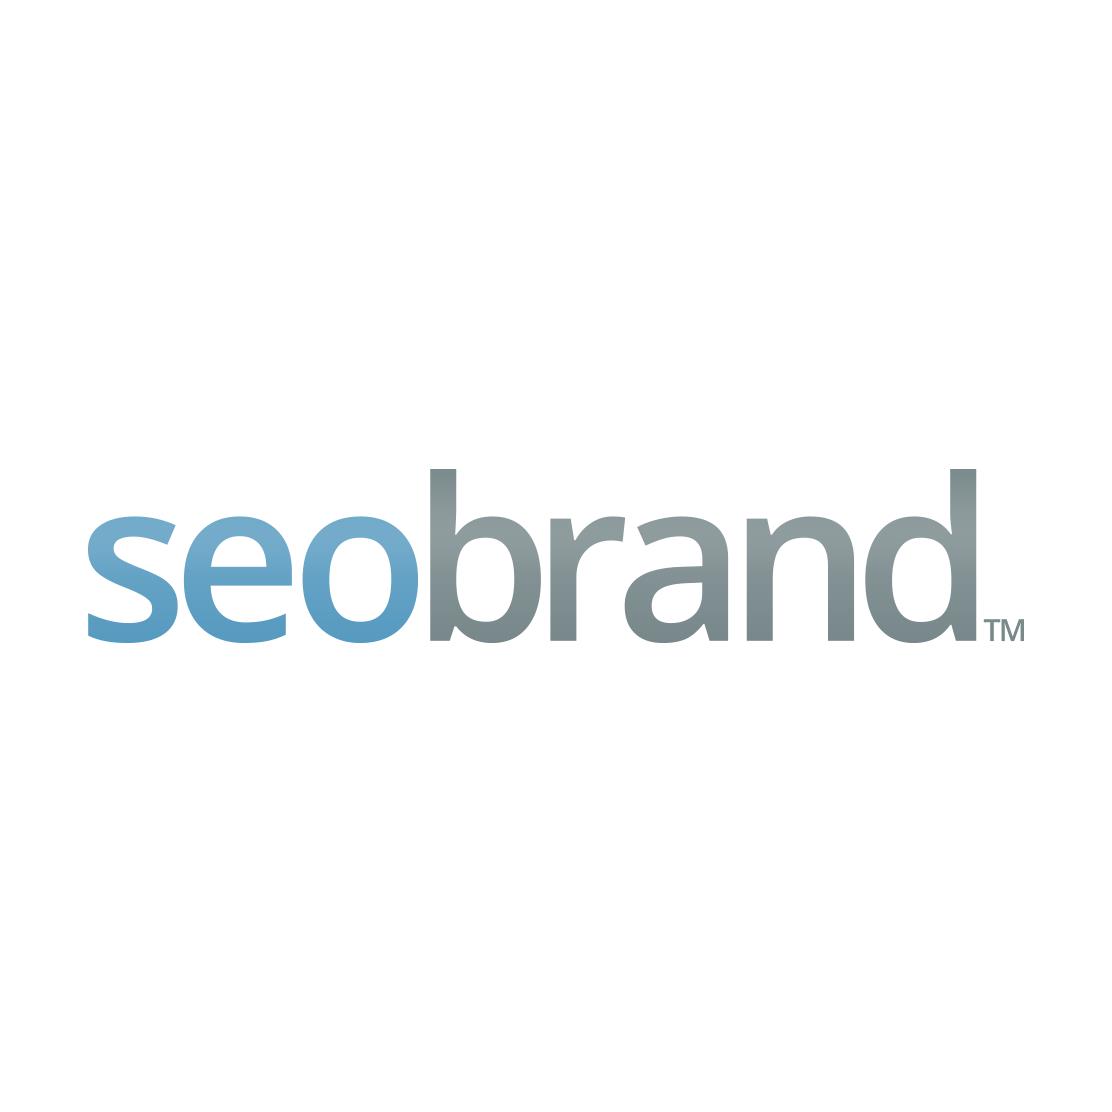 Top ORM Firm Logo: SEO Brand